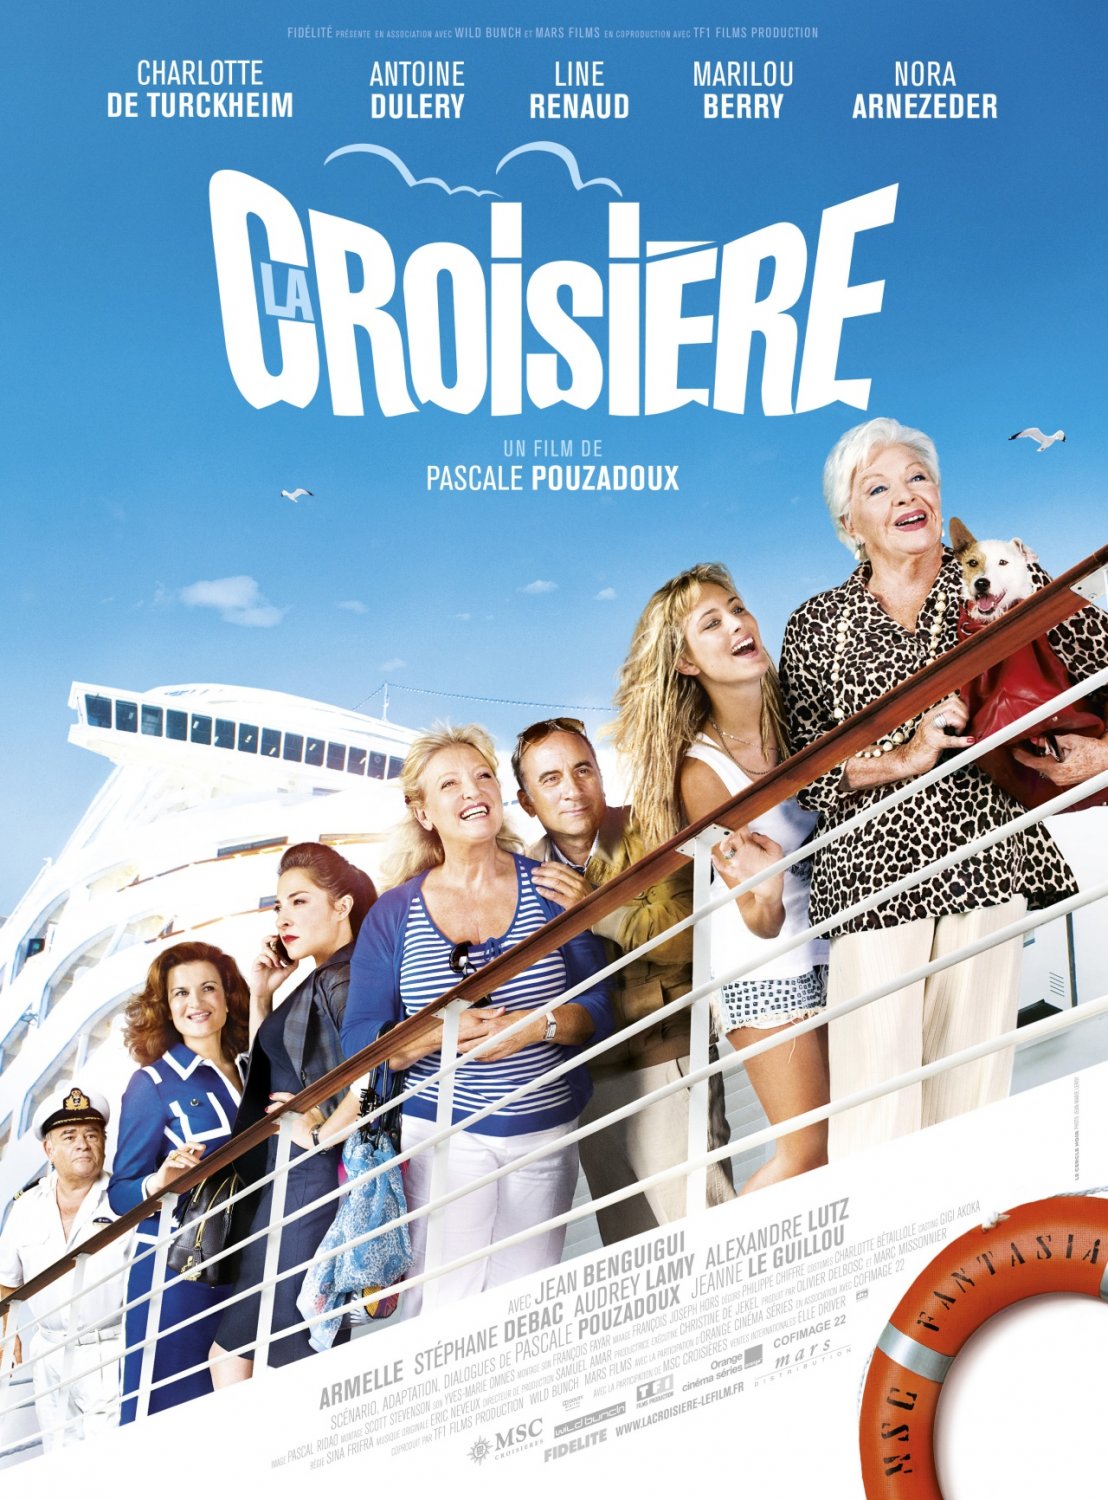 Extra Large Movie Poster Image for La croisière 